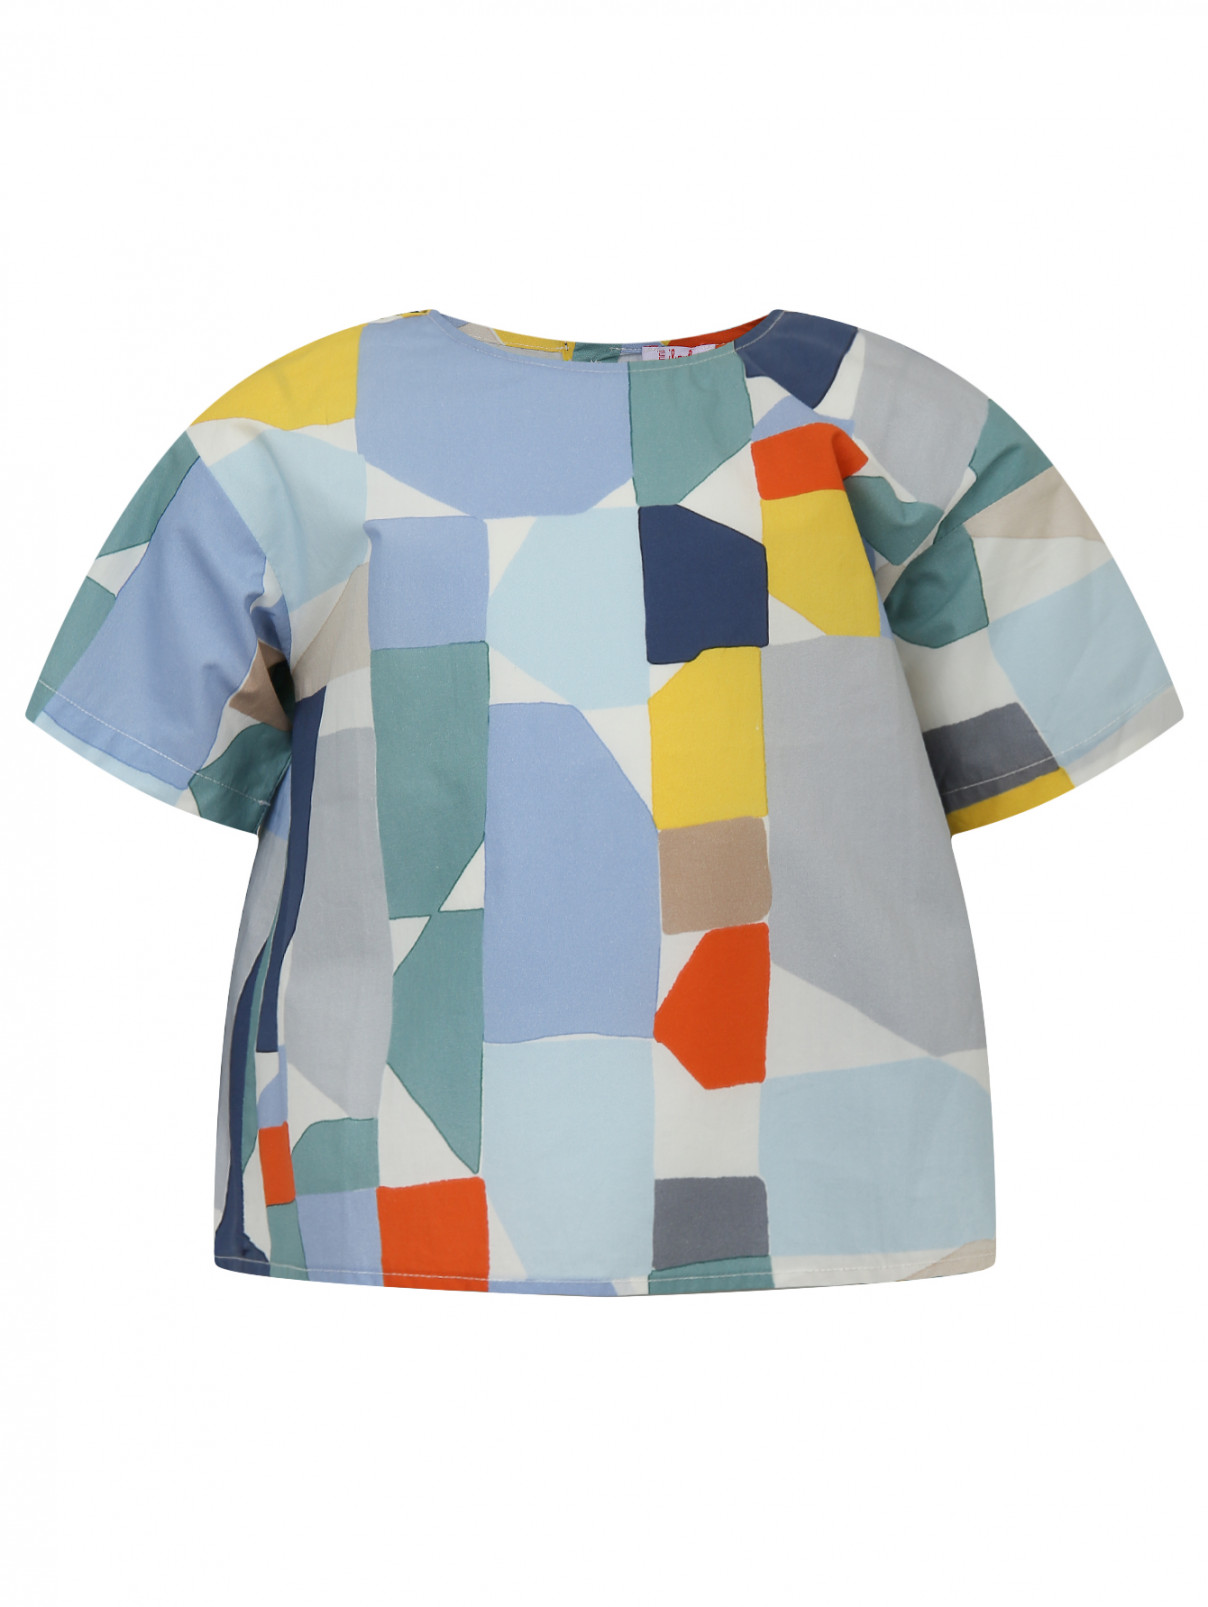 Блуза из хлопка с узором Il Gufo  –  Общий вид  – Цвет:  Синий